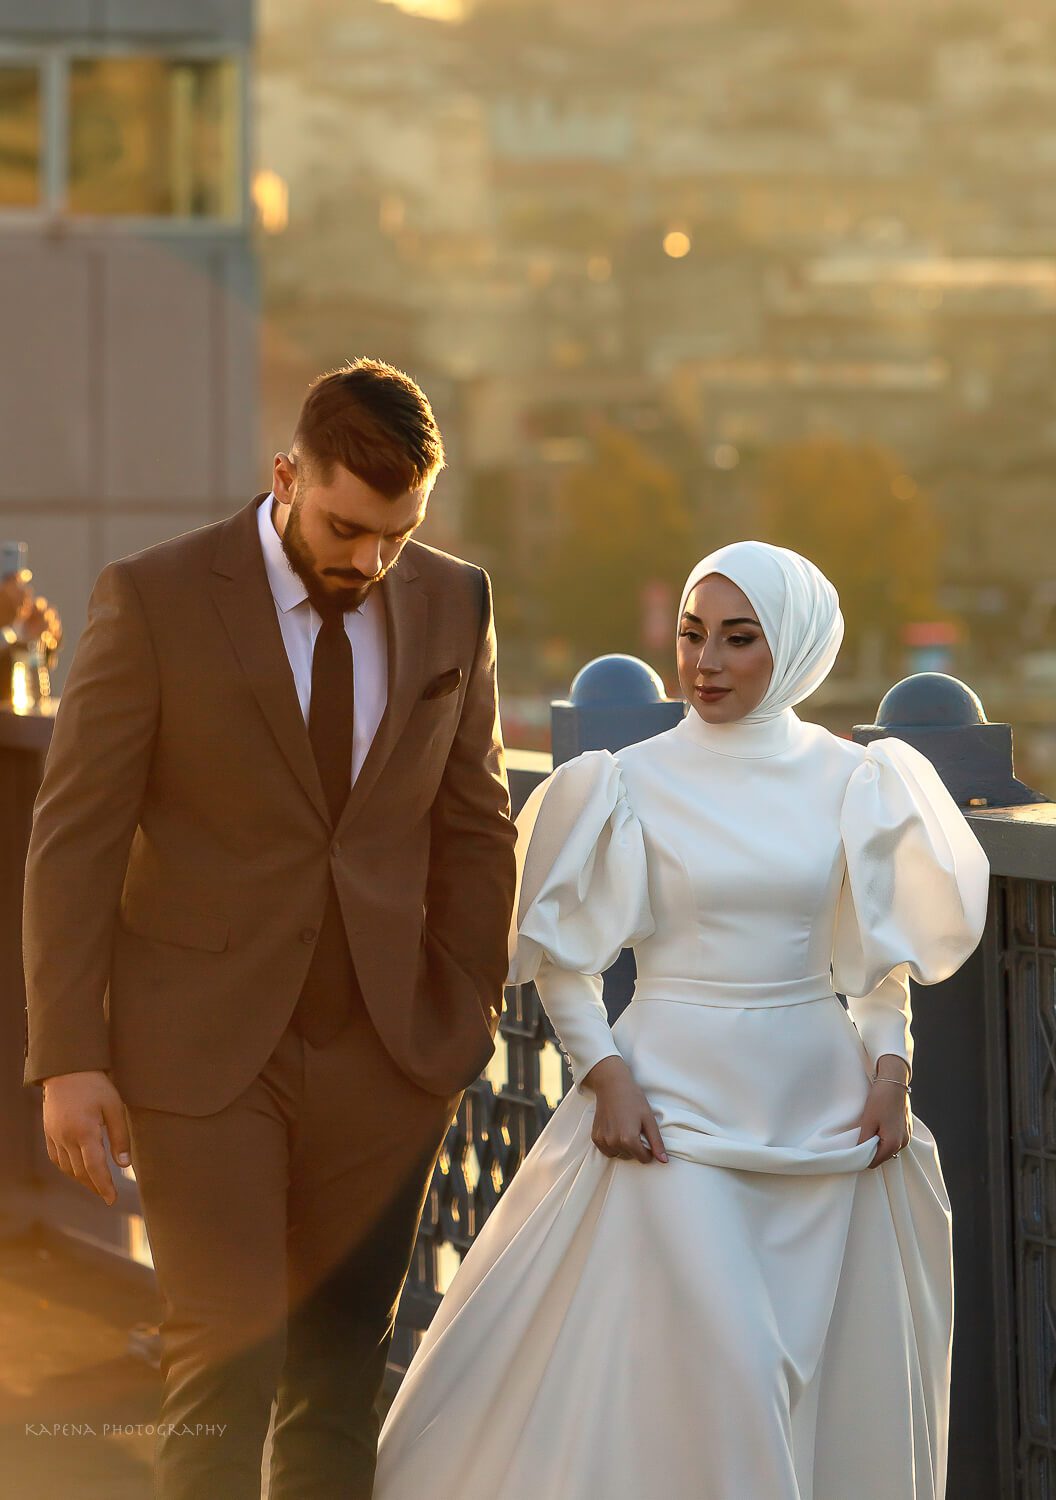 Turkish People getting married